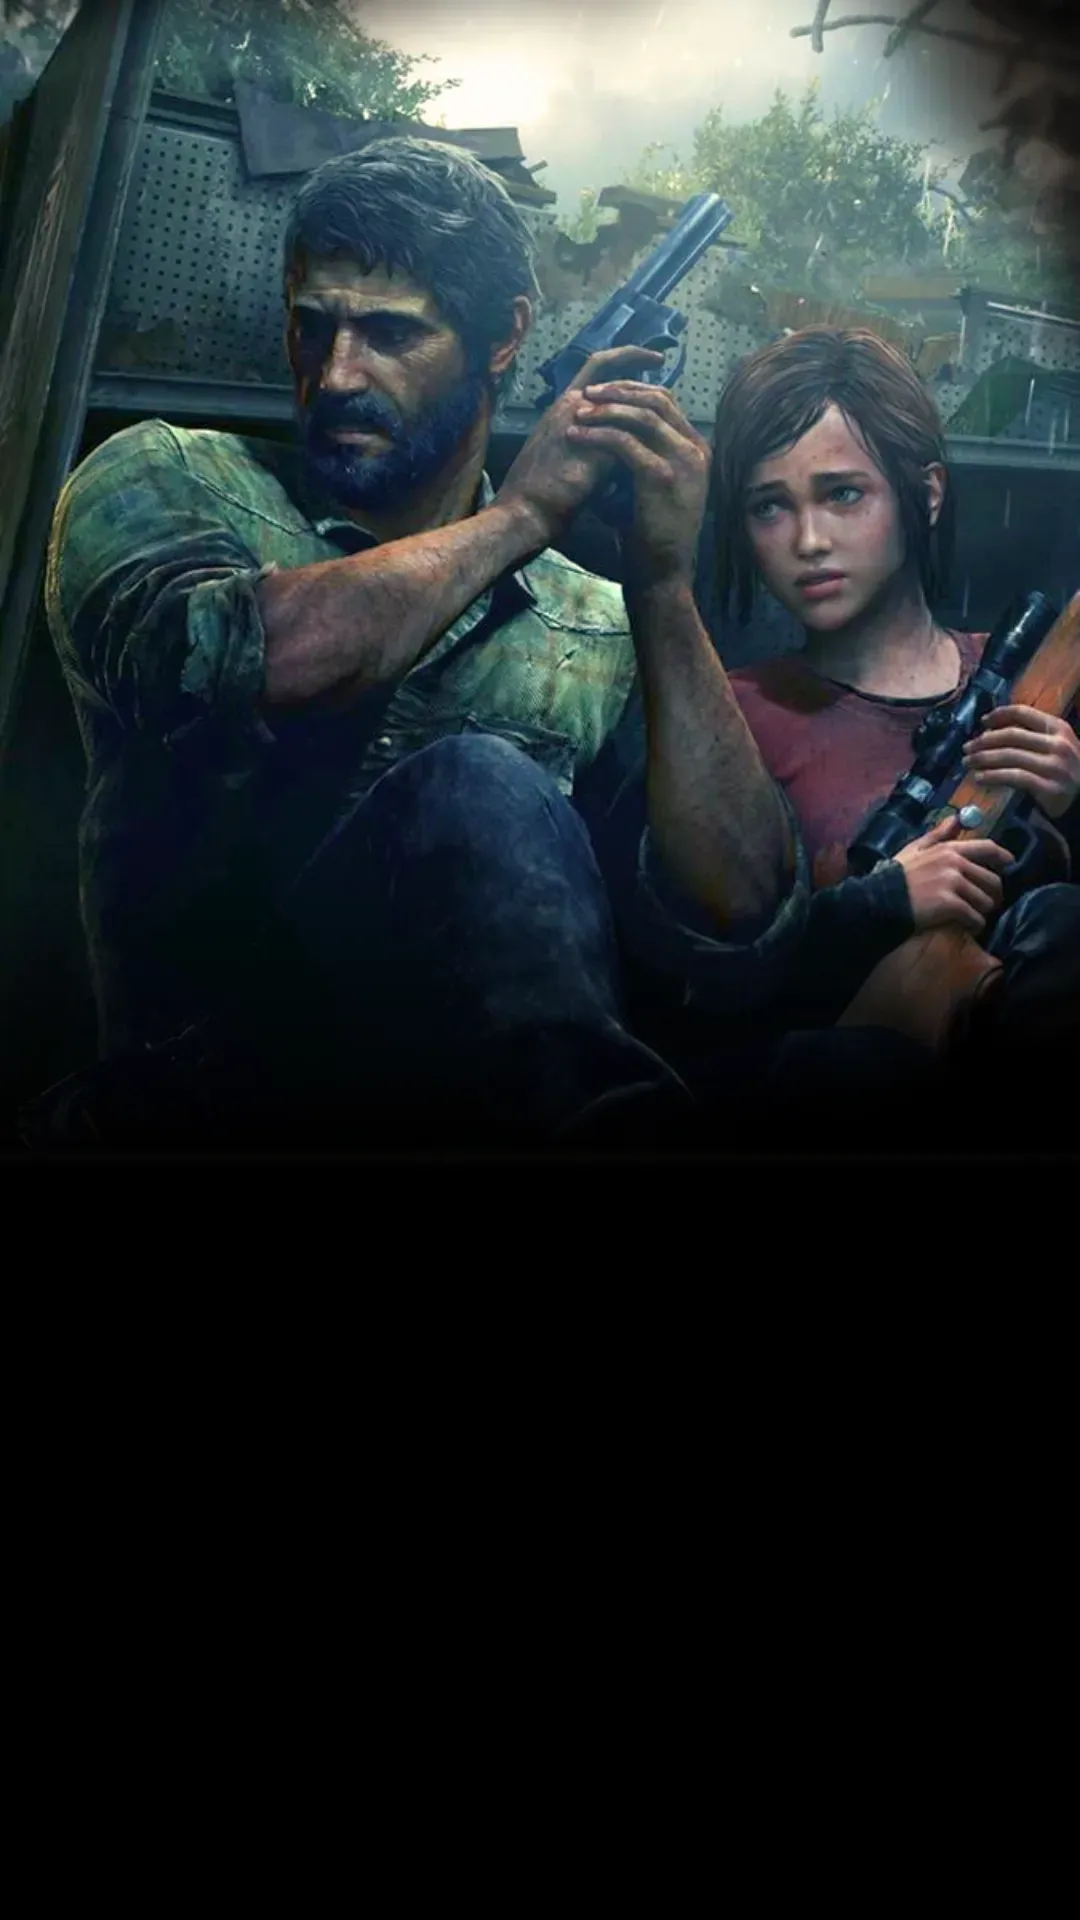 Naughty Dog redireciona o foco de The Last of Us Online para jogos  single-player